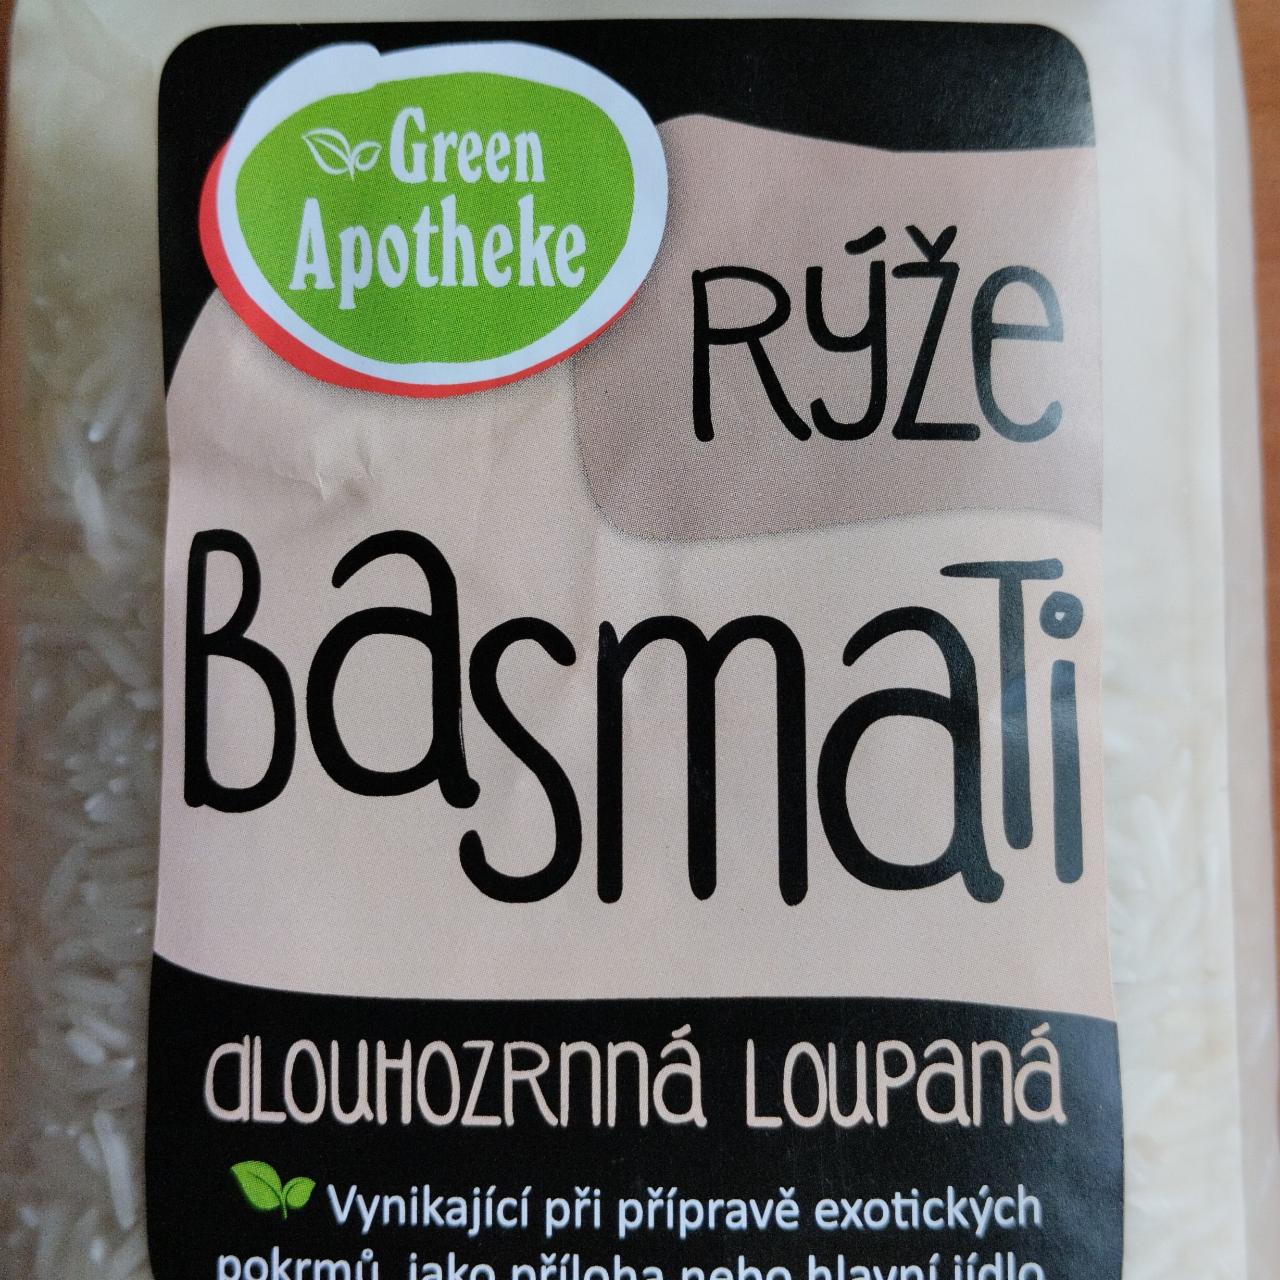 Fotografie - Rýže Basmati dlouhozrnná loupaná Green Apotheke